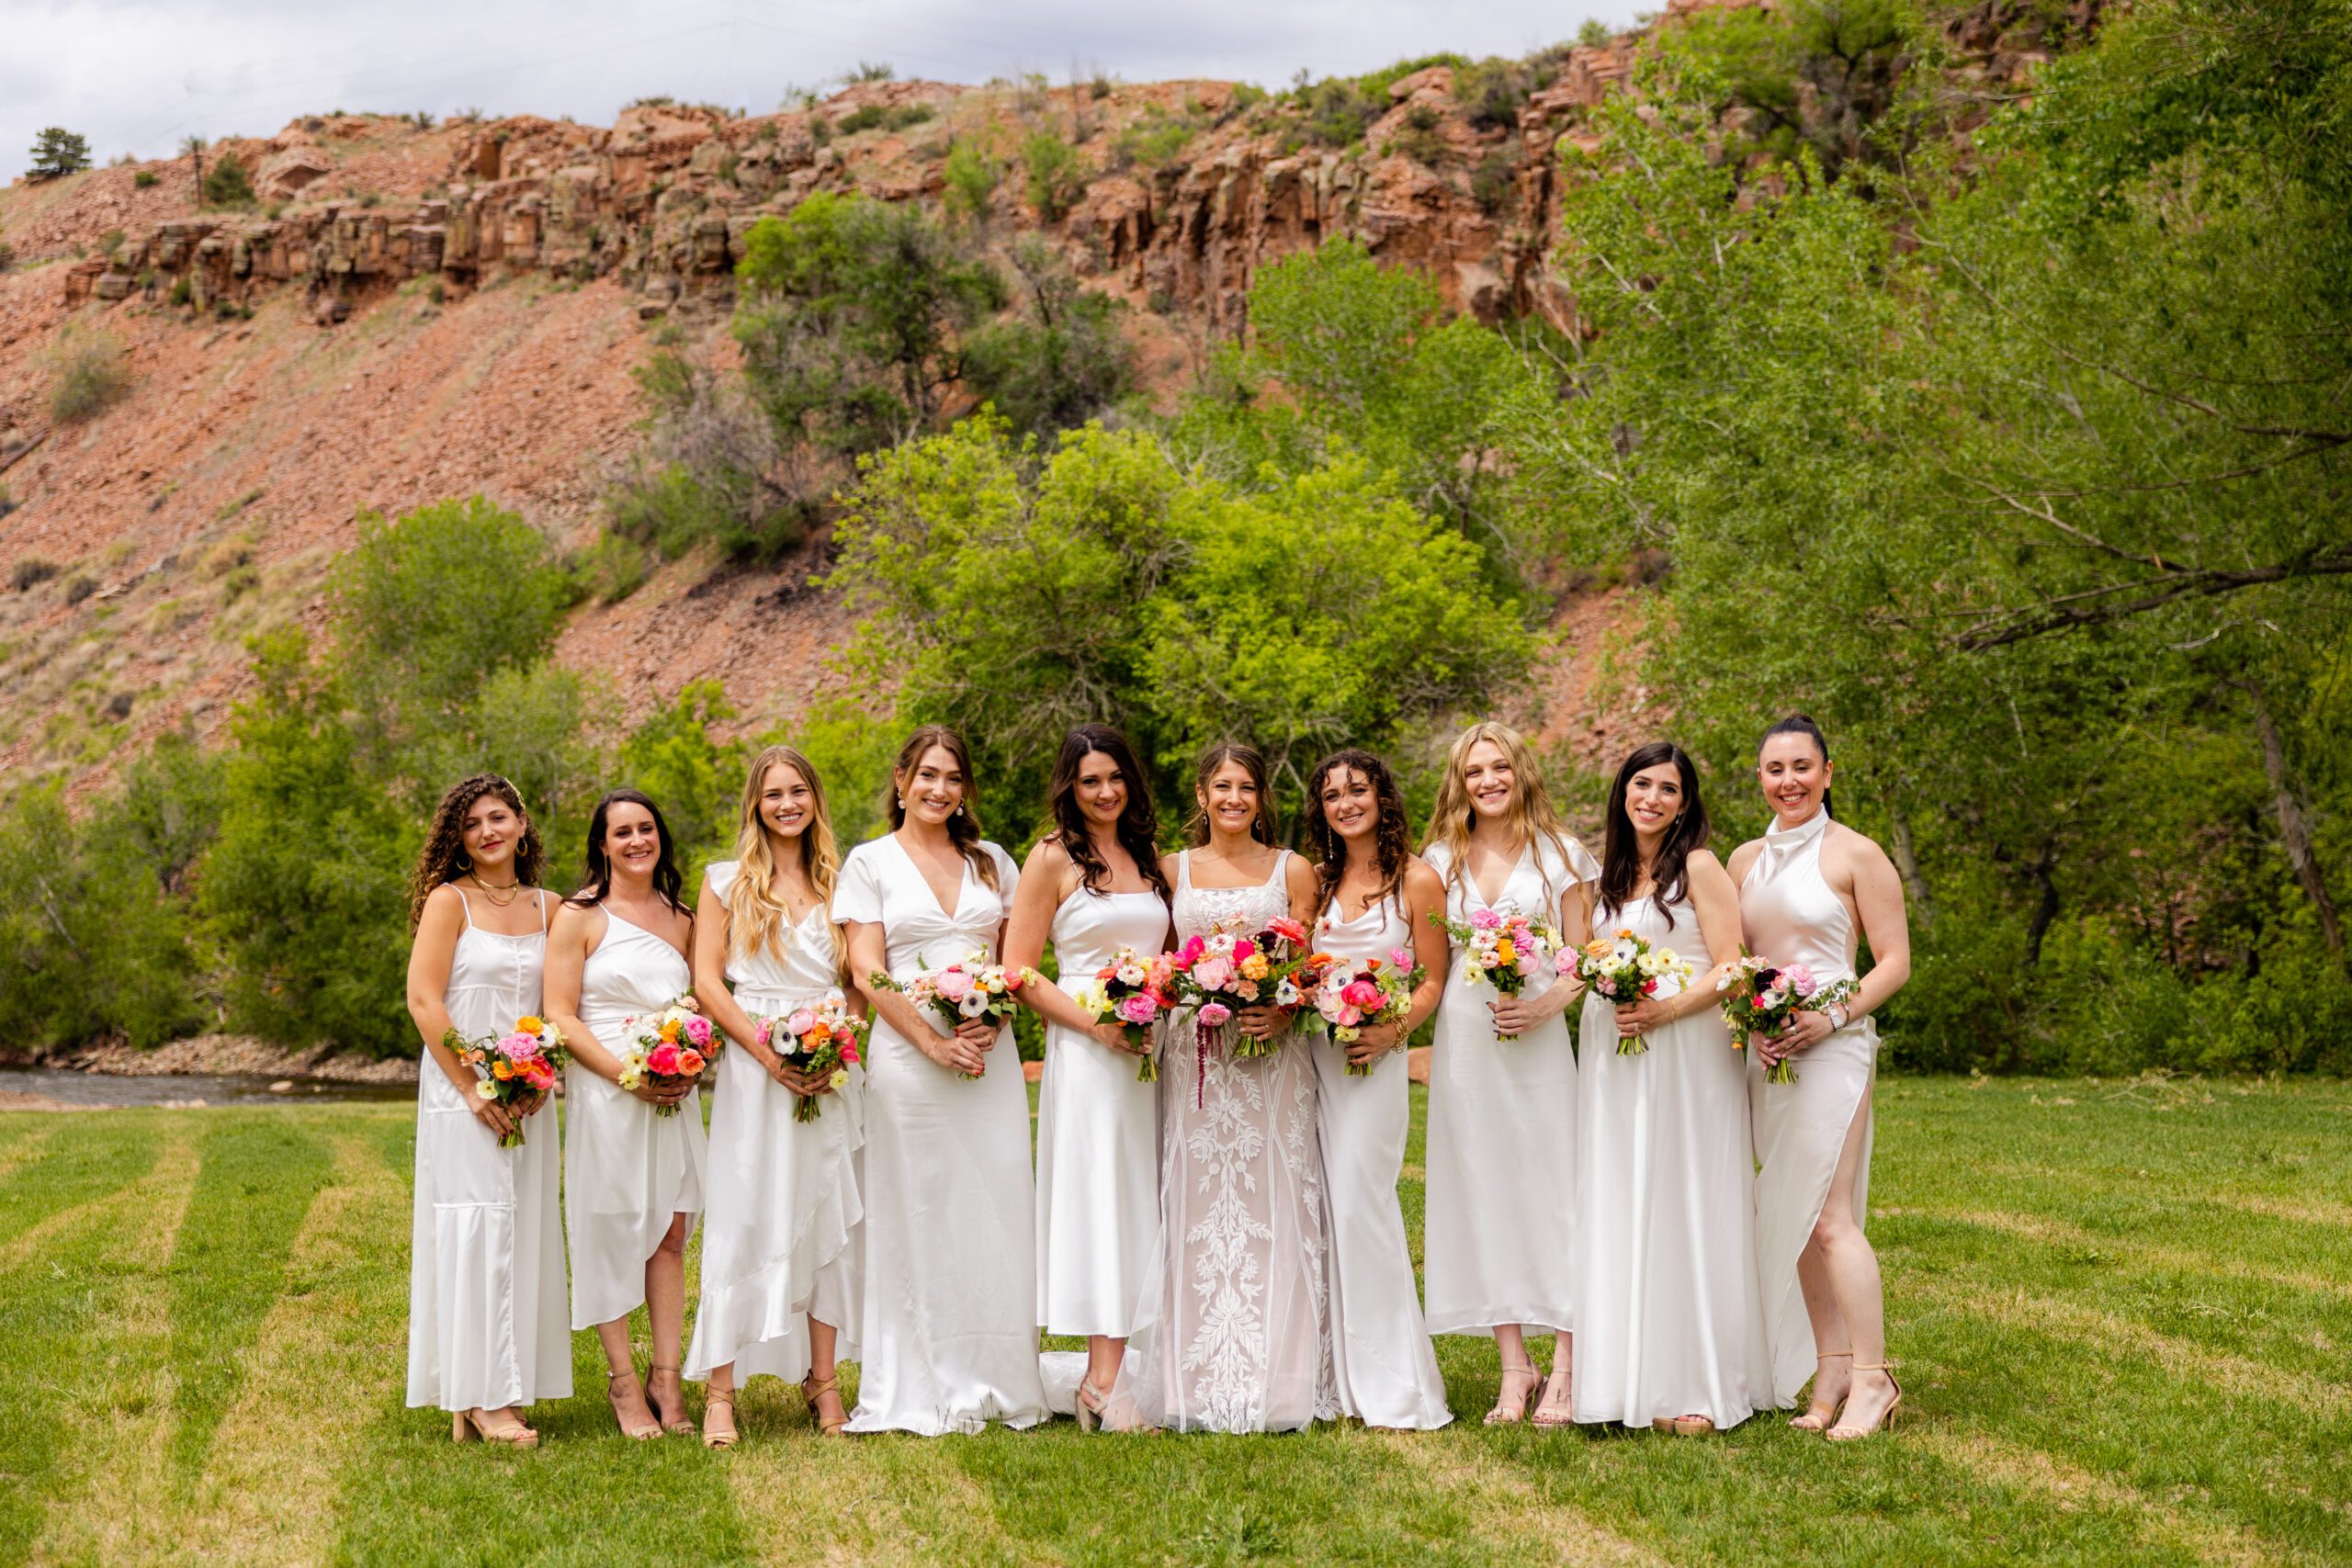 Bridesmaids, Bridesmaids dresses, mix and match bridesmaids dresses, white bridesmaids dresses, ivory bridesmaids dresses, bridesmaids photos, Planet Bluegrass, Colorado wedding photographer